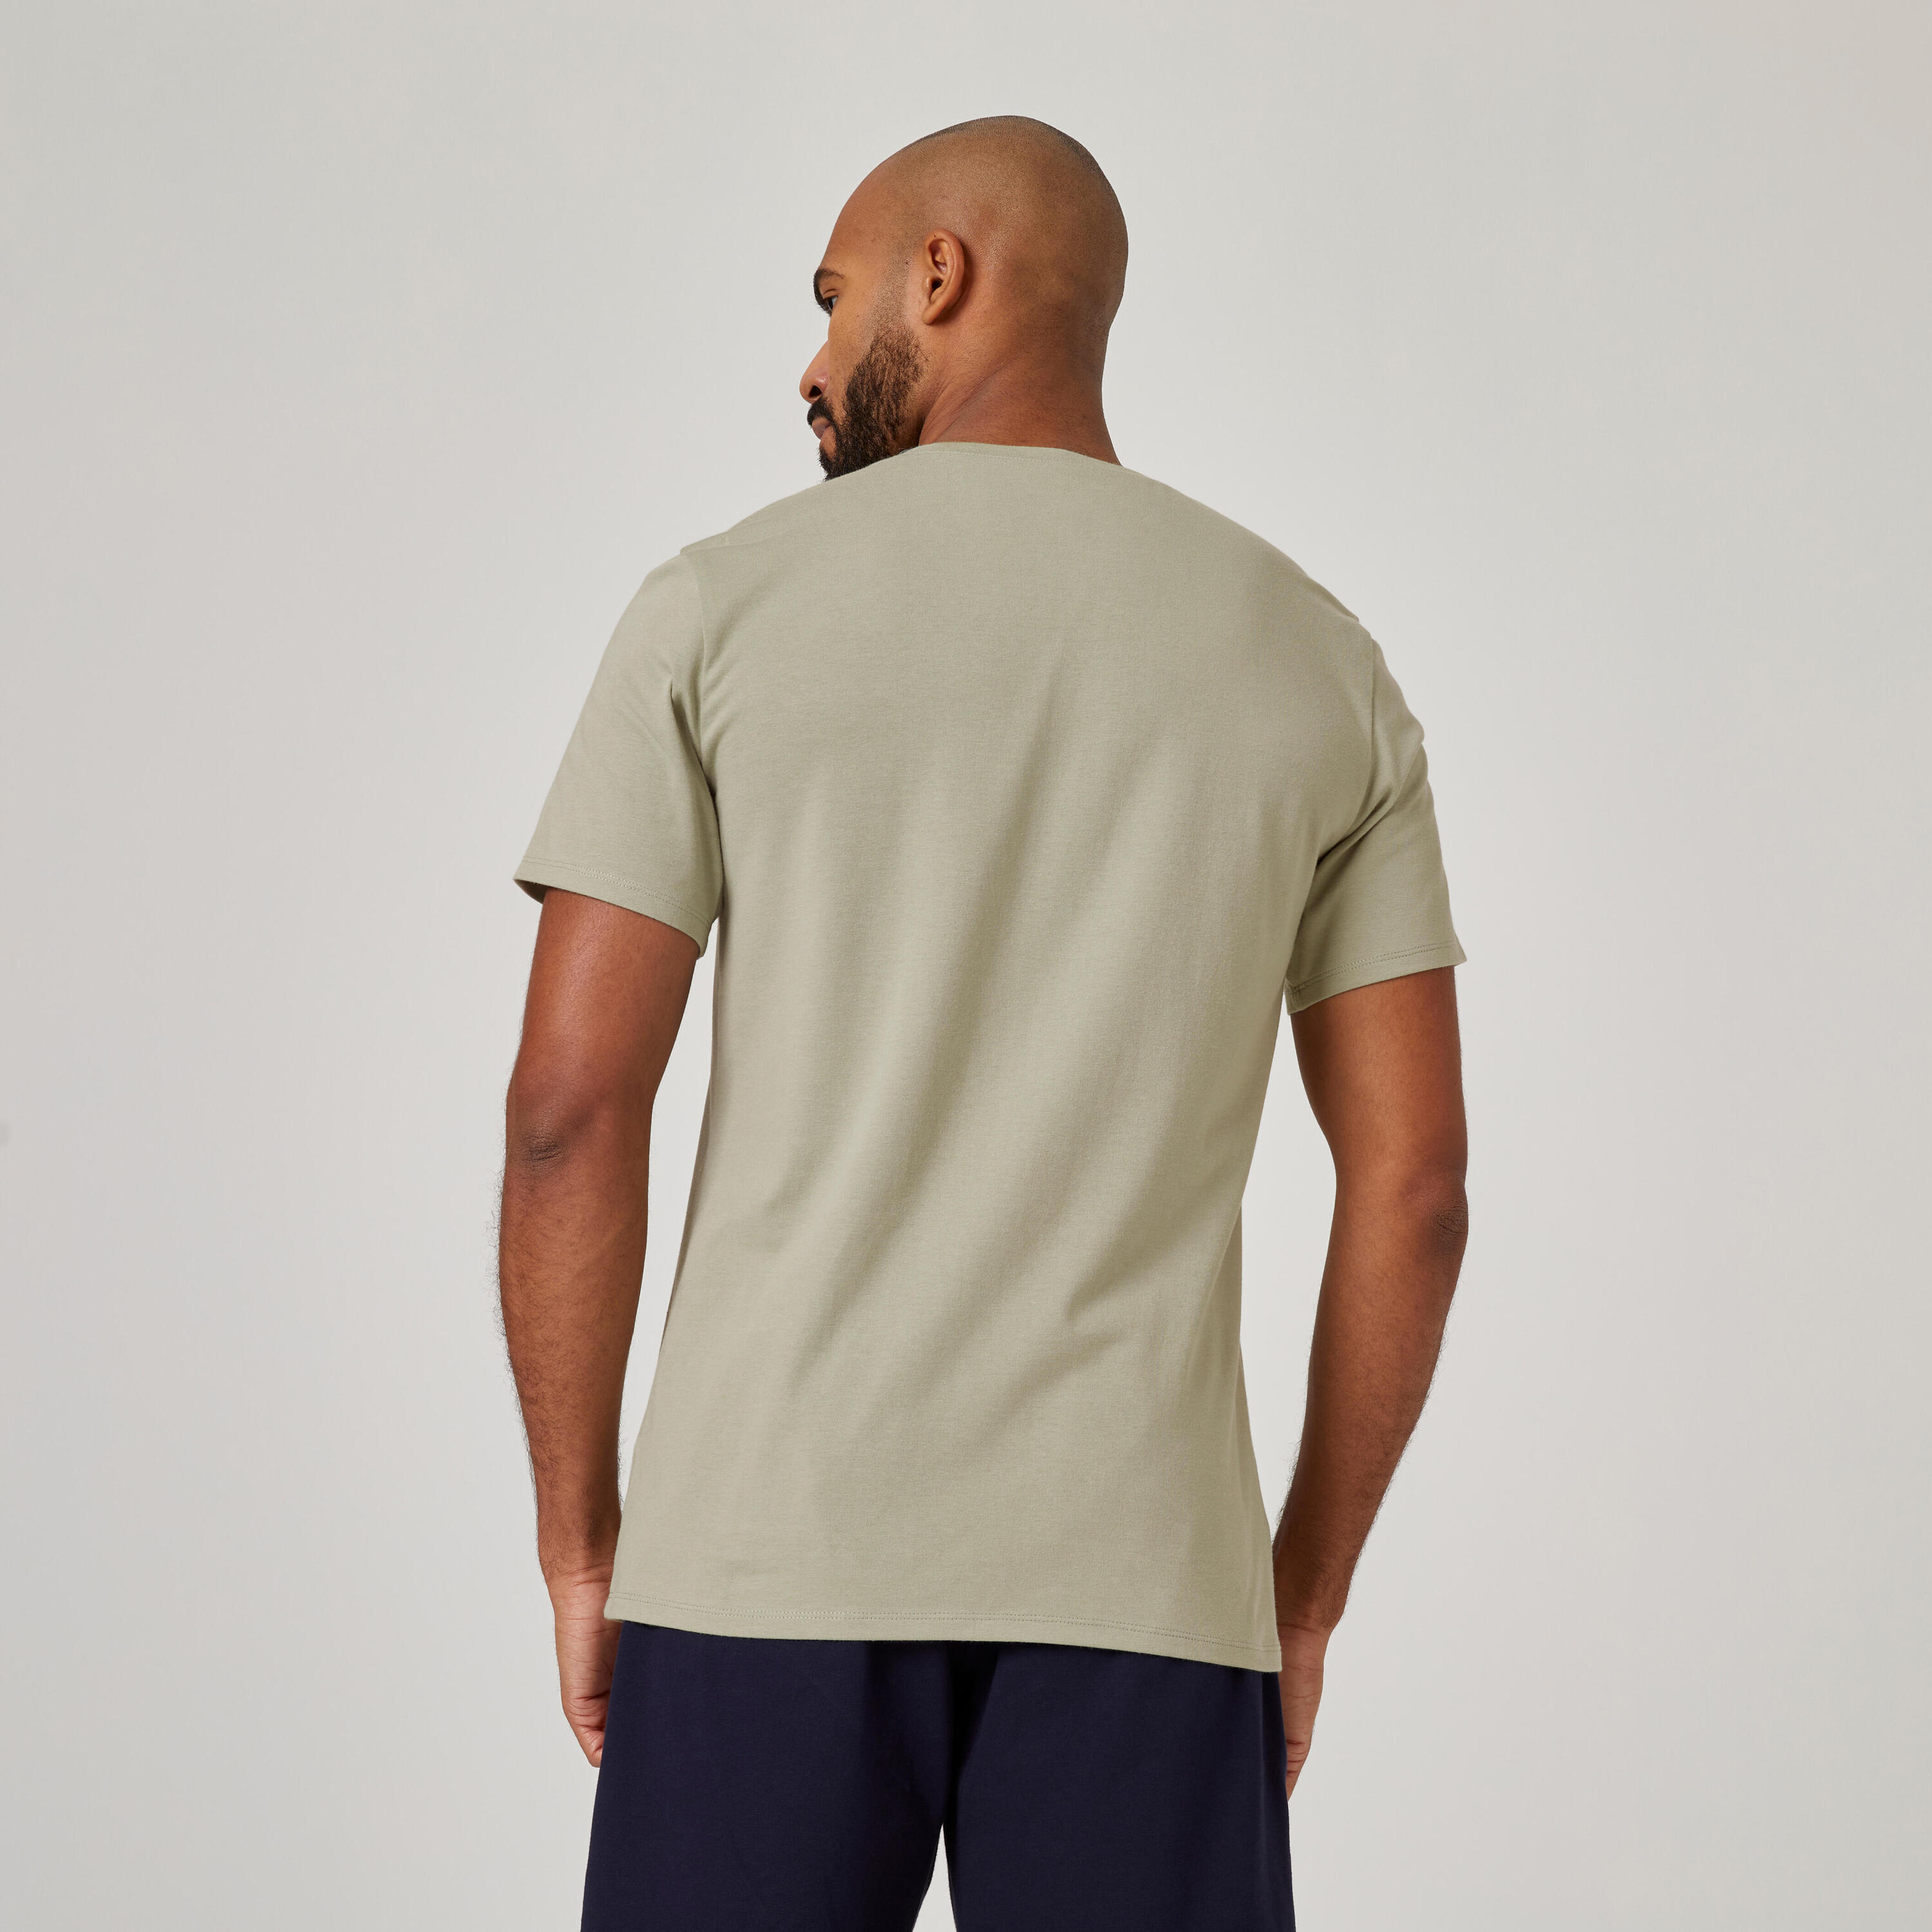 Men's Short-Sleeved Straight-Cut Crew Neck Cotton Fitness T-Shirt 500 - Sage Grey 2/6